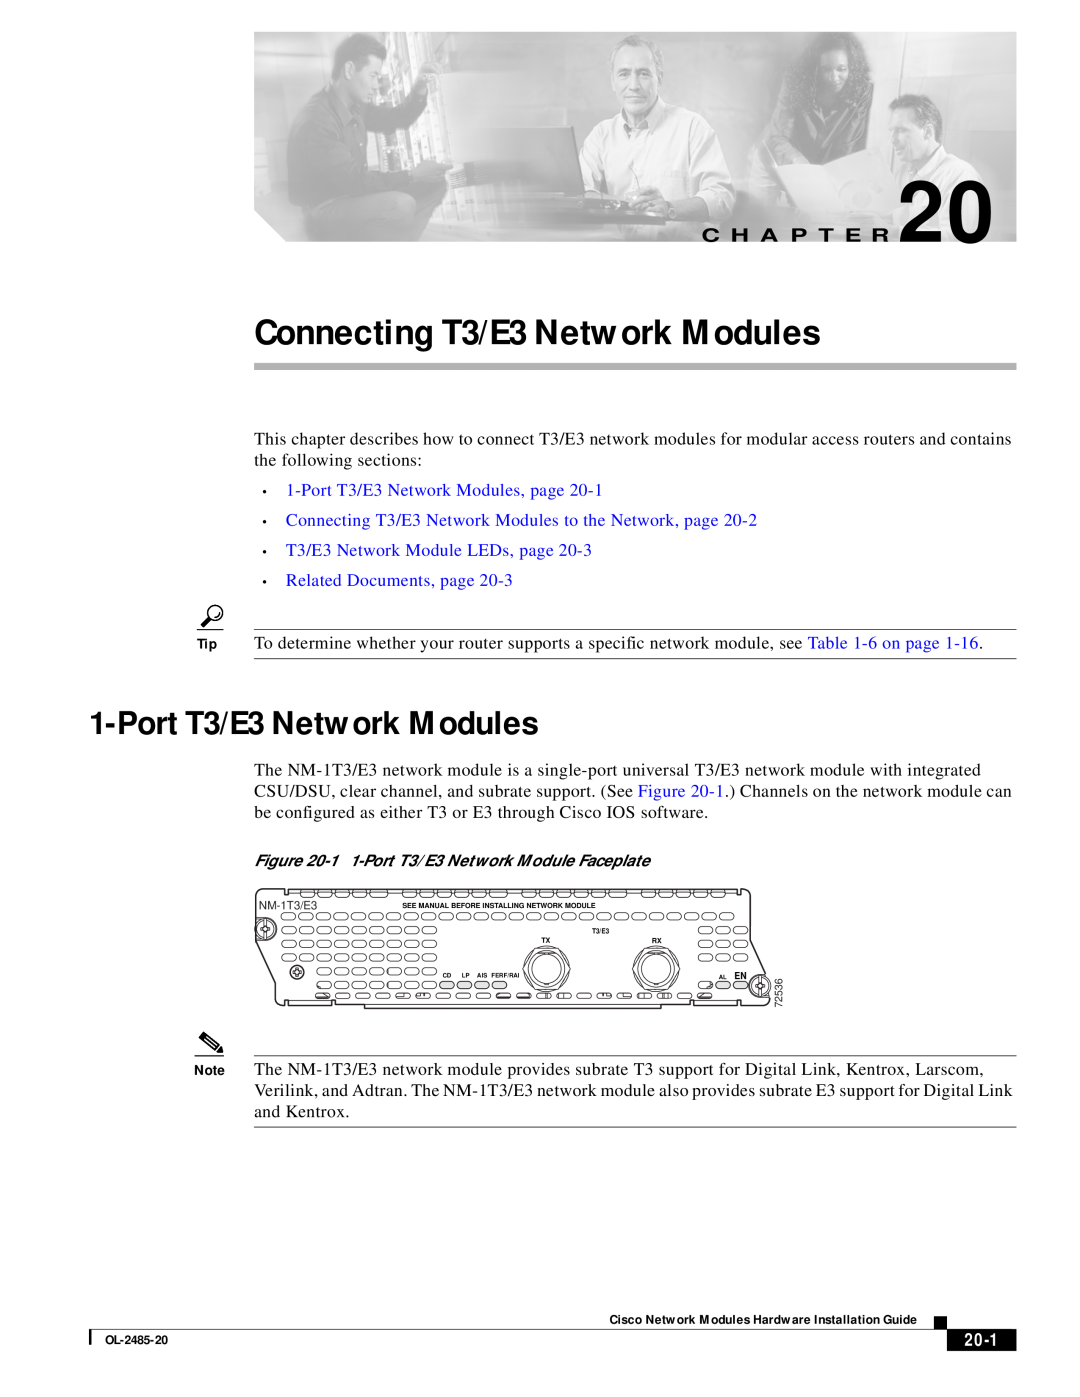 Cisco Systems OL-2485-20 manual Port T3/E3 Network Modules, 20-1, Connecting T3/E3 Network Modules, C H A P T E R 